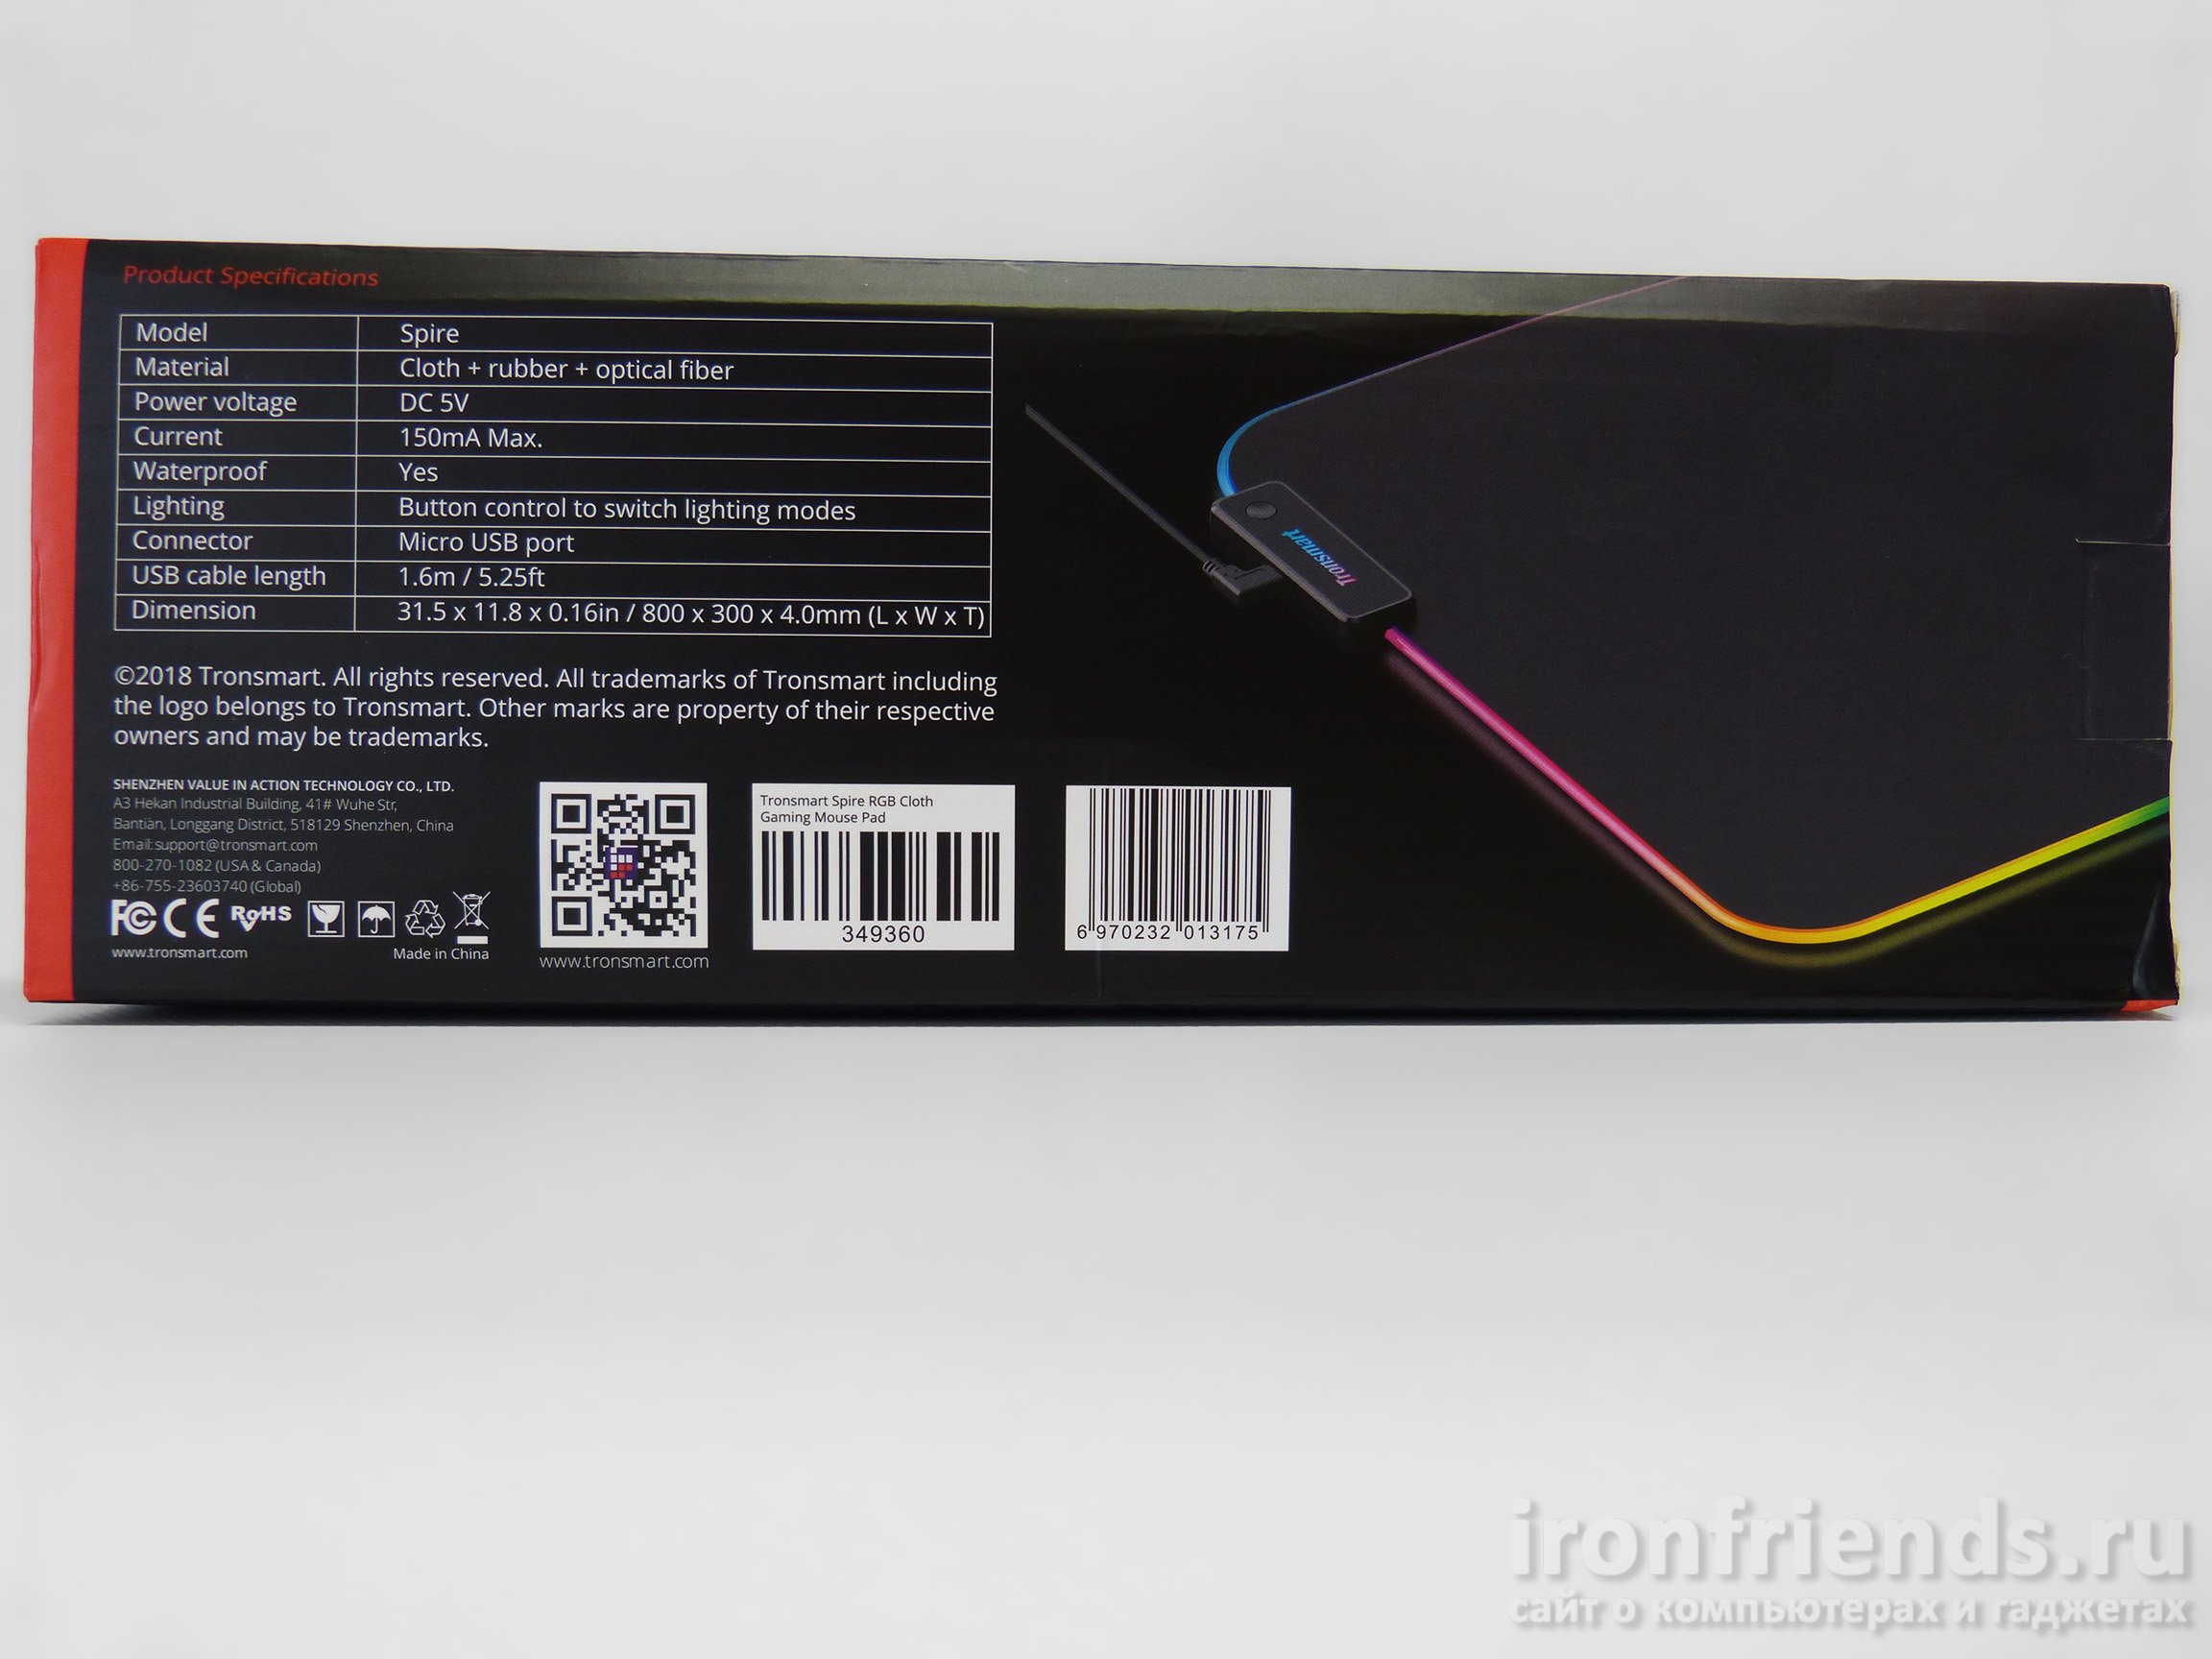 Характеристики Tronsmart Spire RGB Mouse Pad